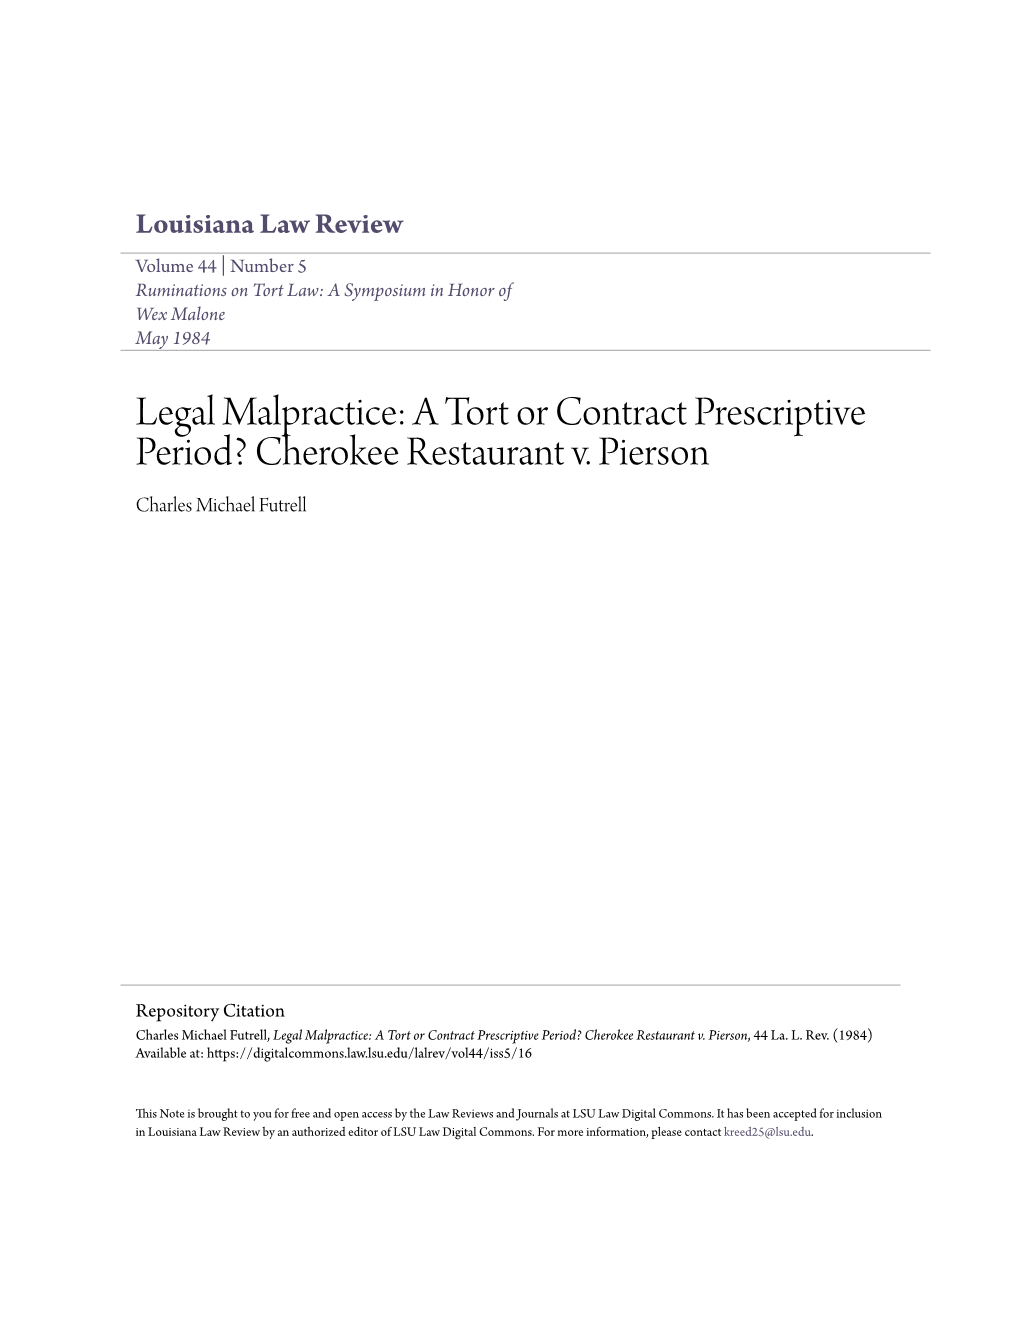 Legal Malpractice: a Tort Or Contract Prescriptive Period? Cherokee Restaurant V